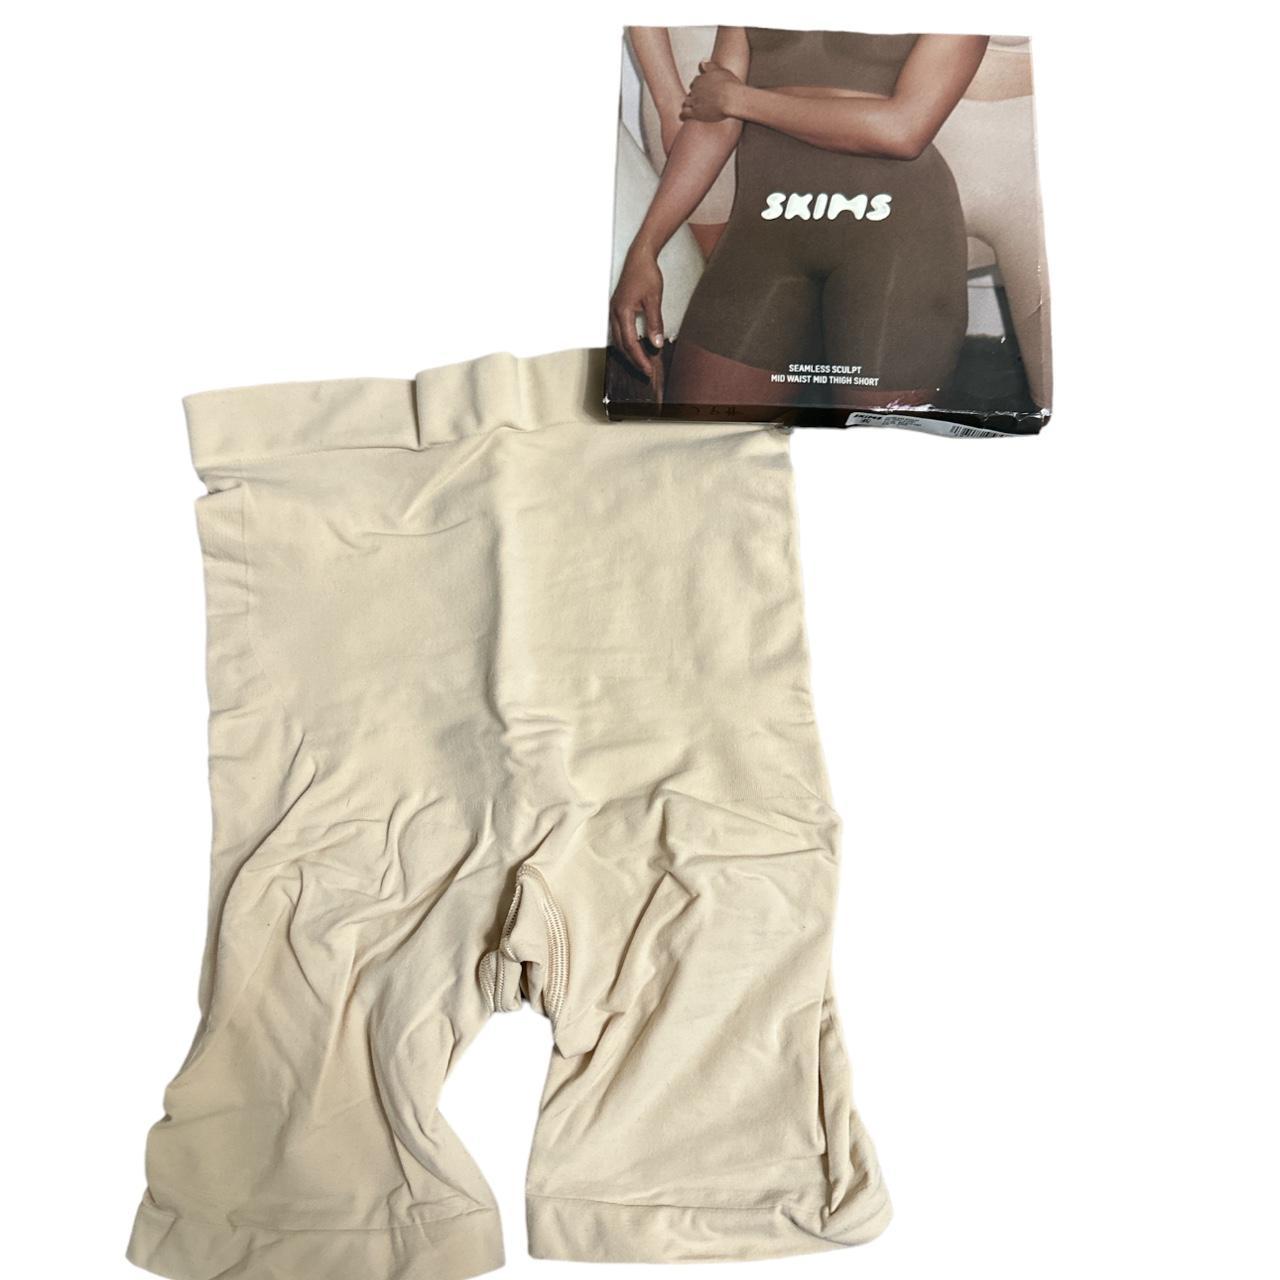 SKIMS seamless sculpt mid-tight shorts in colour - Depop